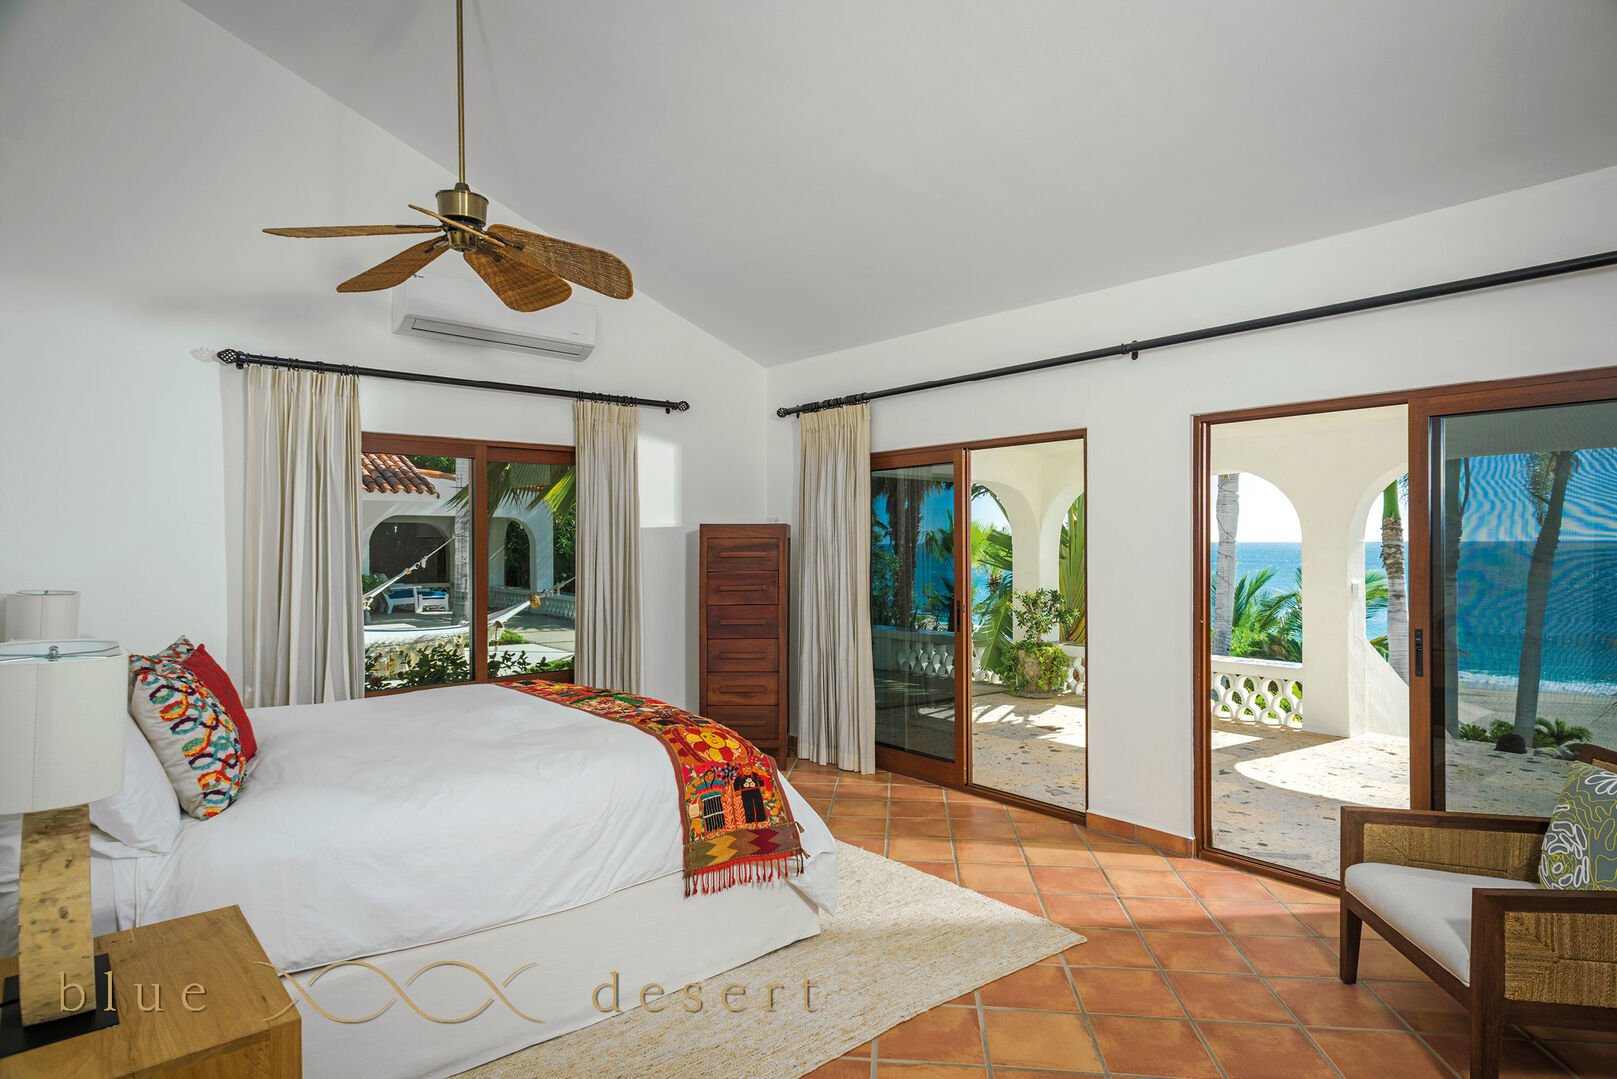 King Size bed with Ocean View and en-suite bedroom.